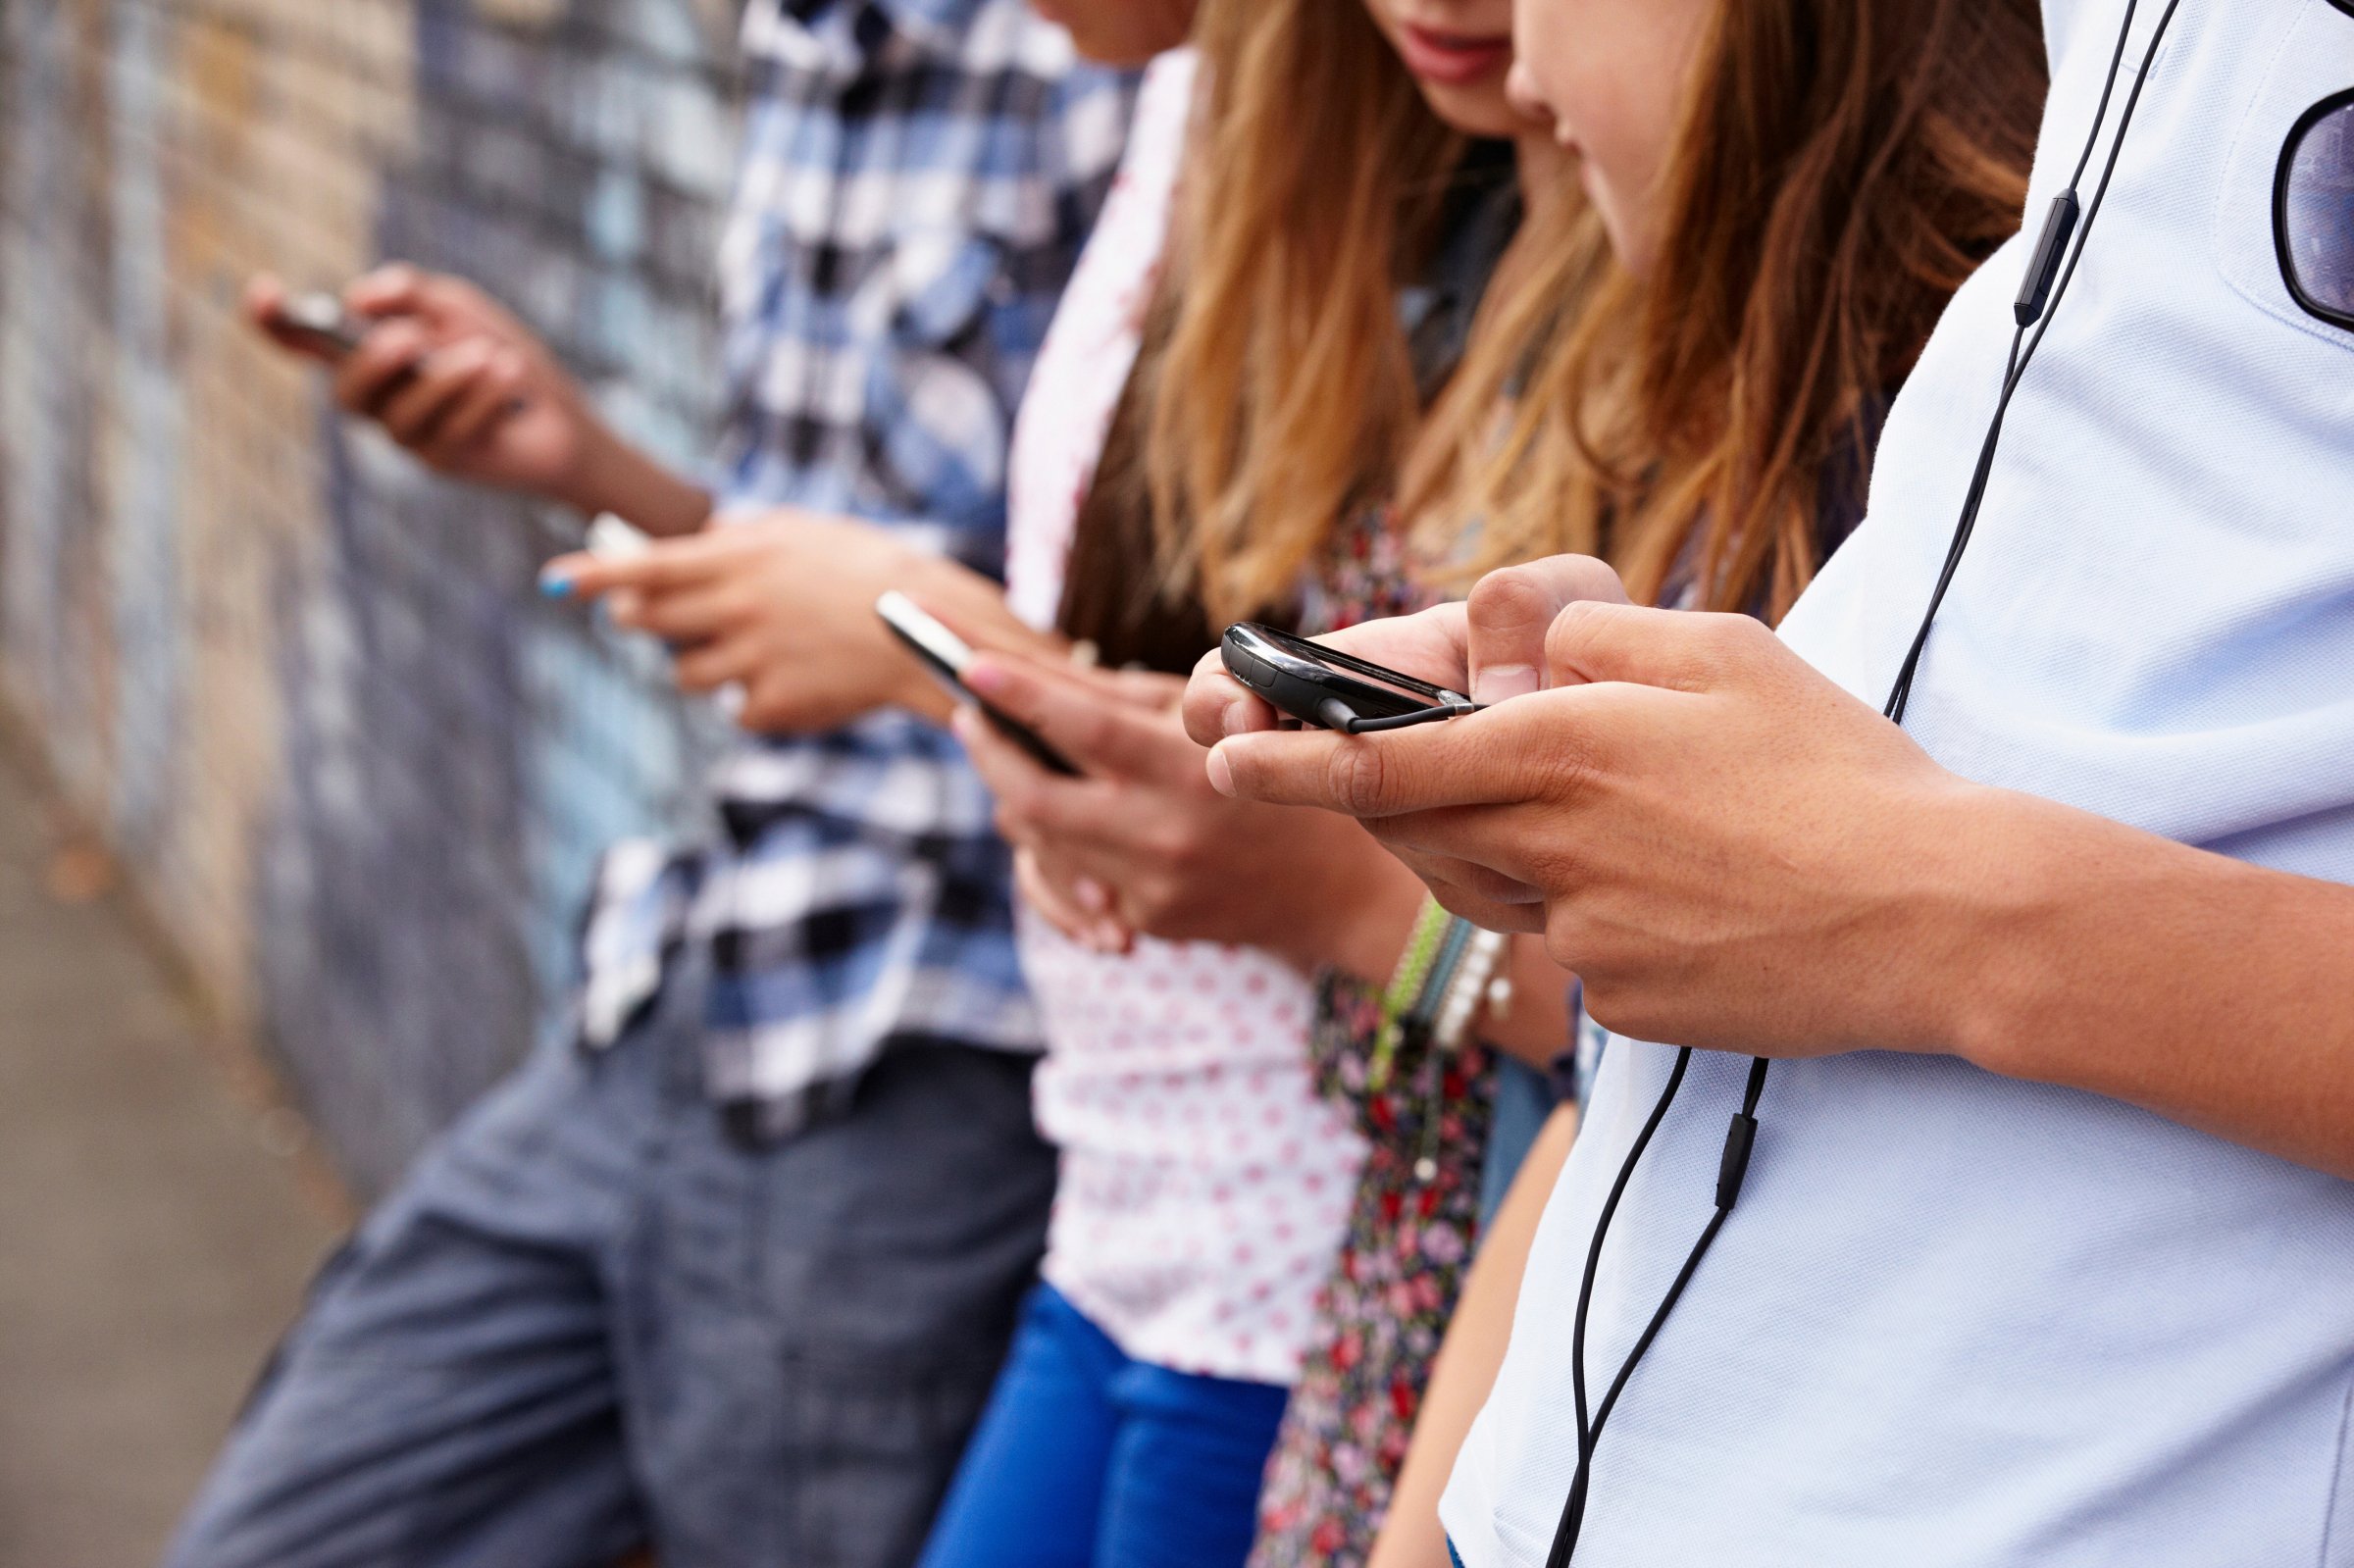 Teenagers using cellphones